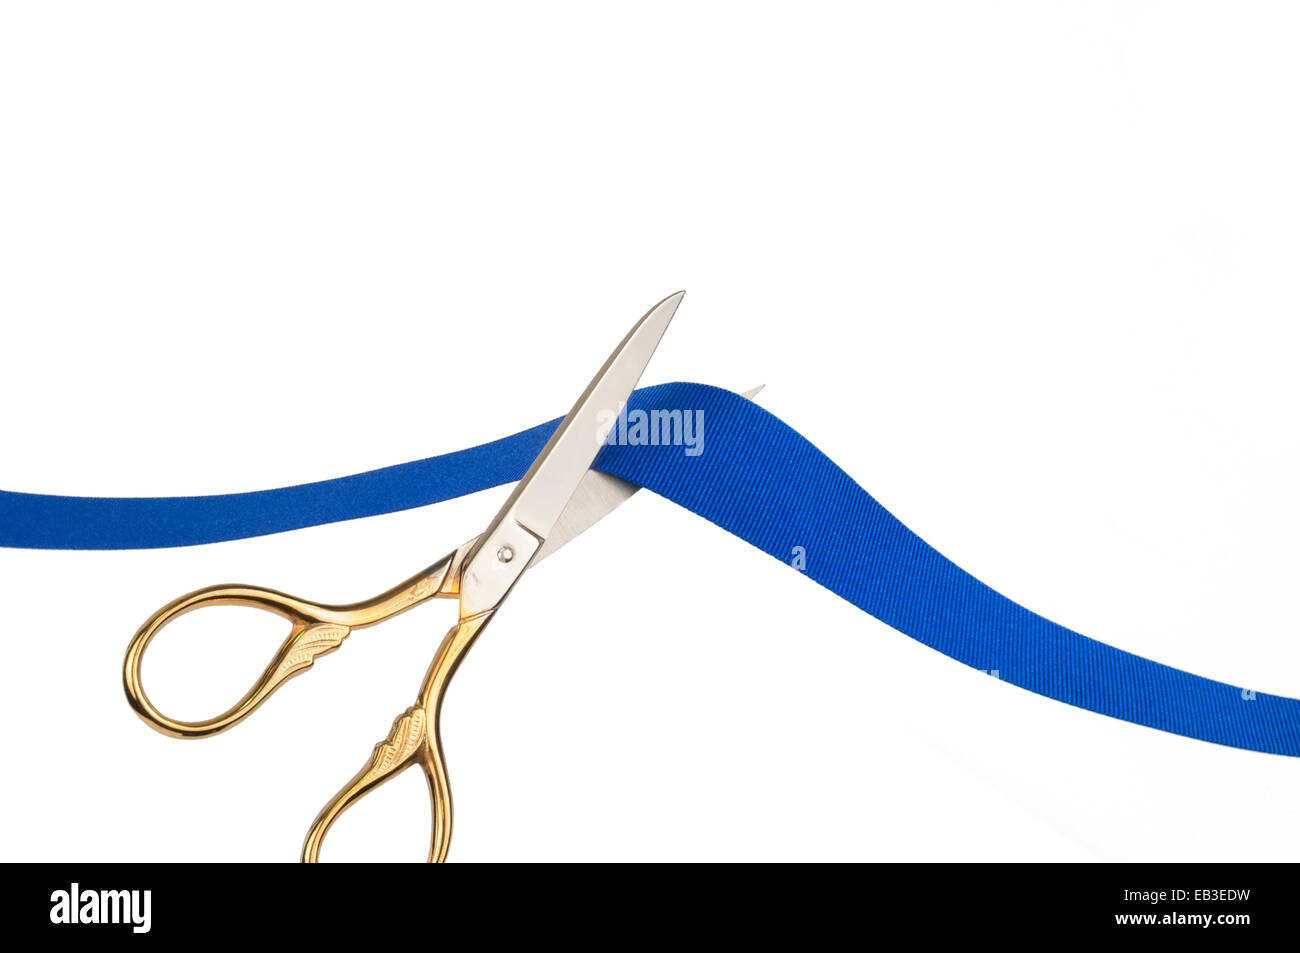 Scissors cutting a blue ribbon Stock Photo